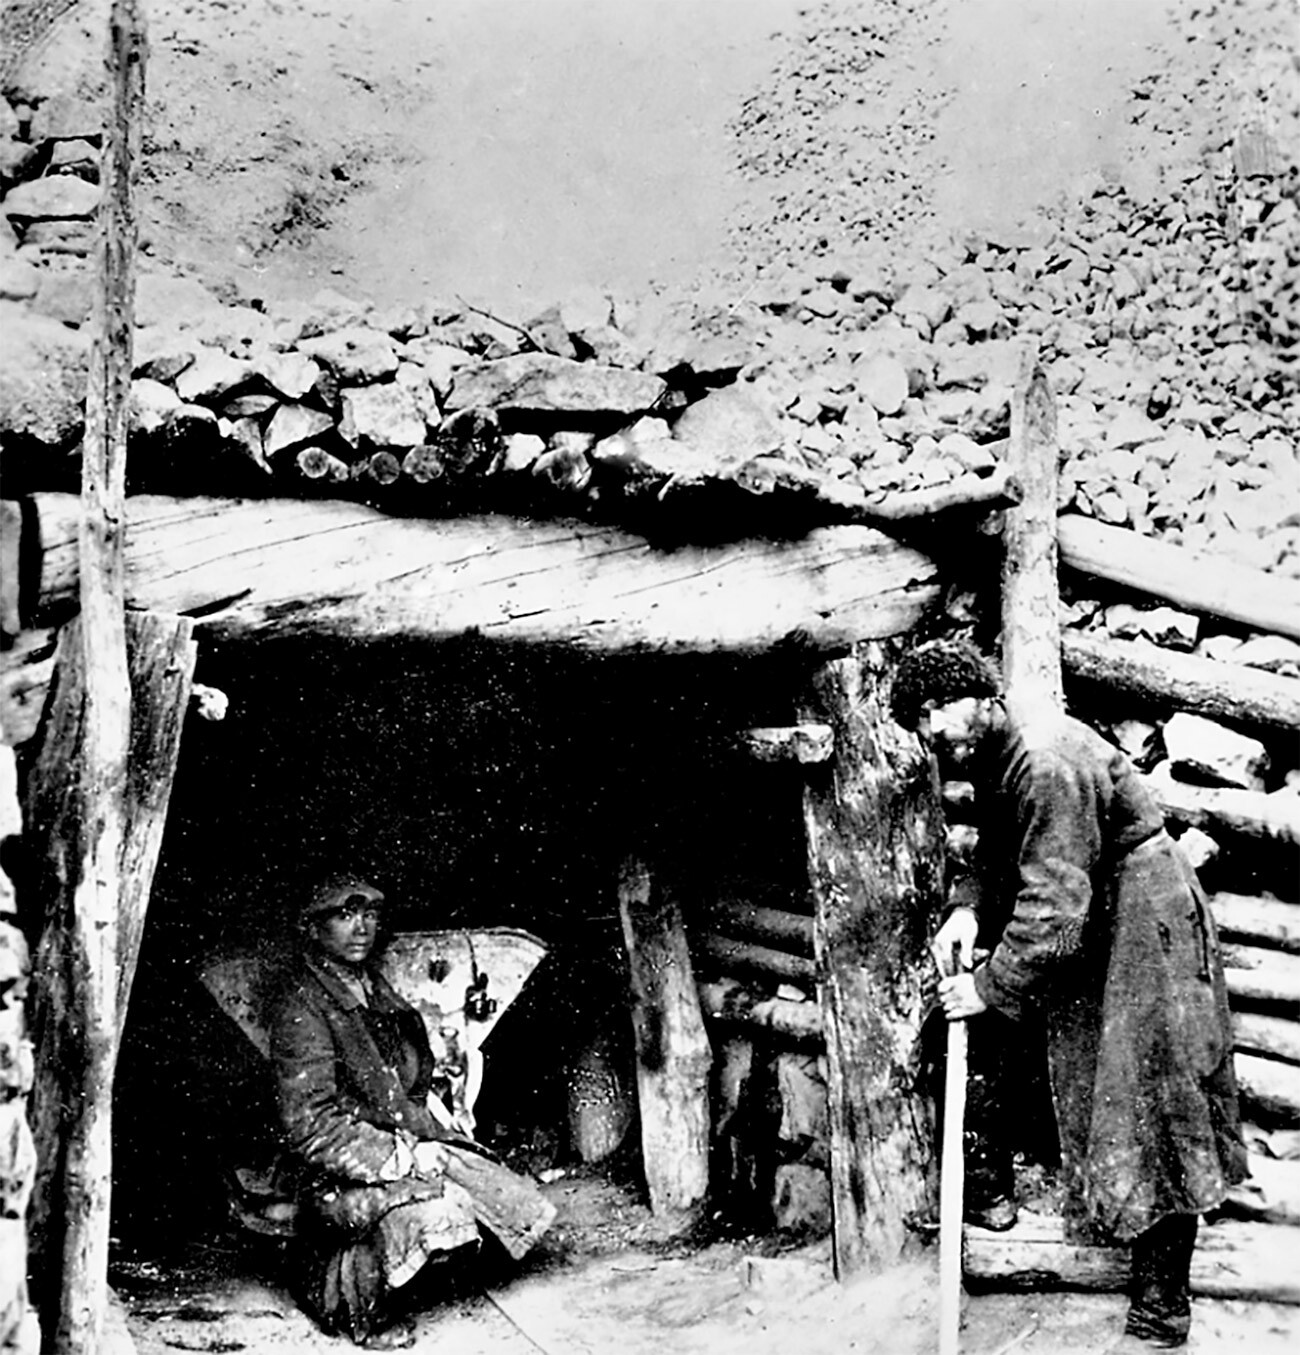 Entrée de la mine, en 1910